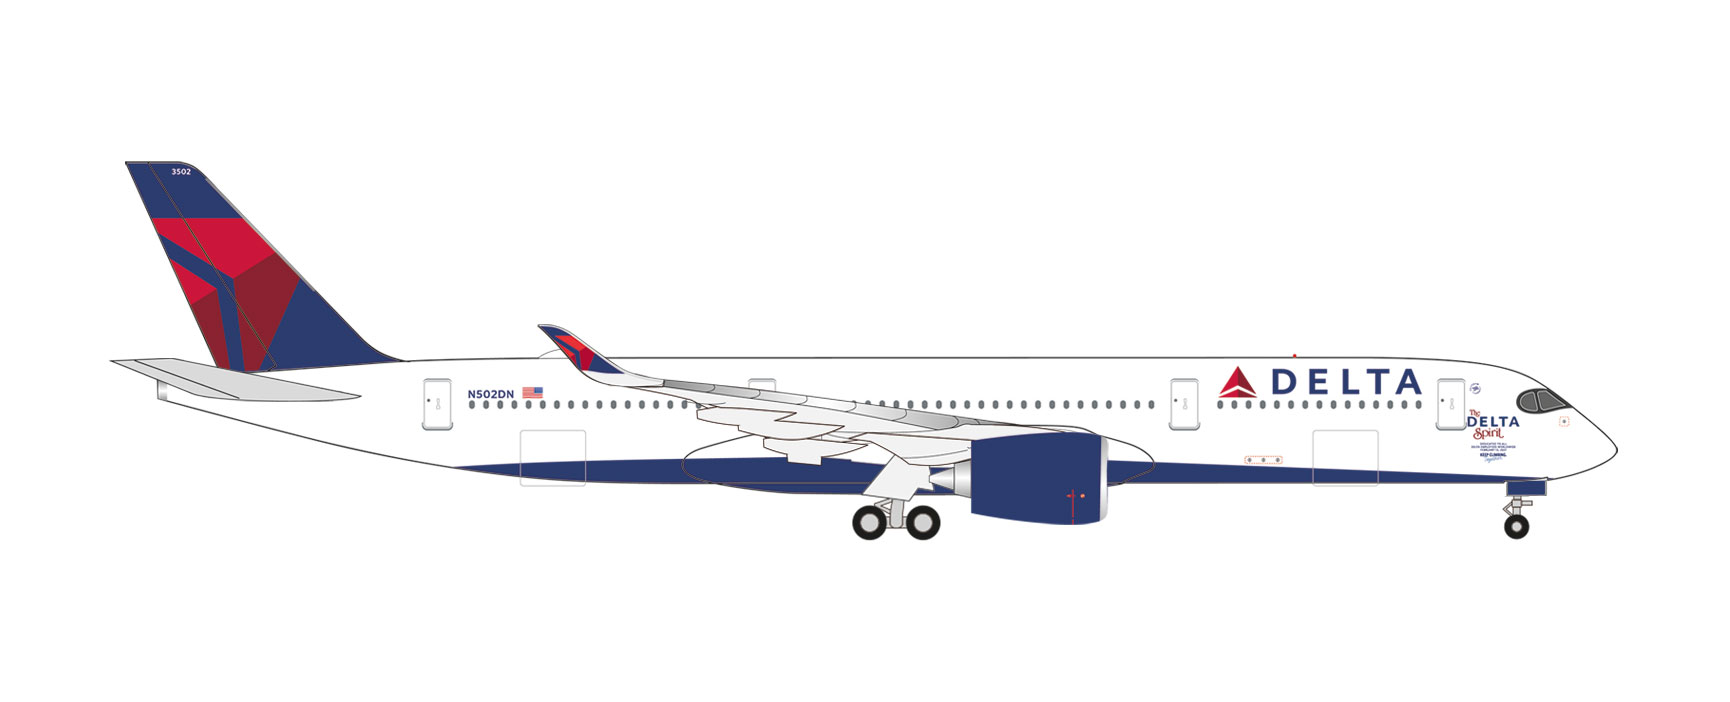 Delta A350-900 The DeltaSpiri